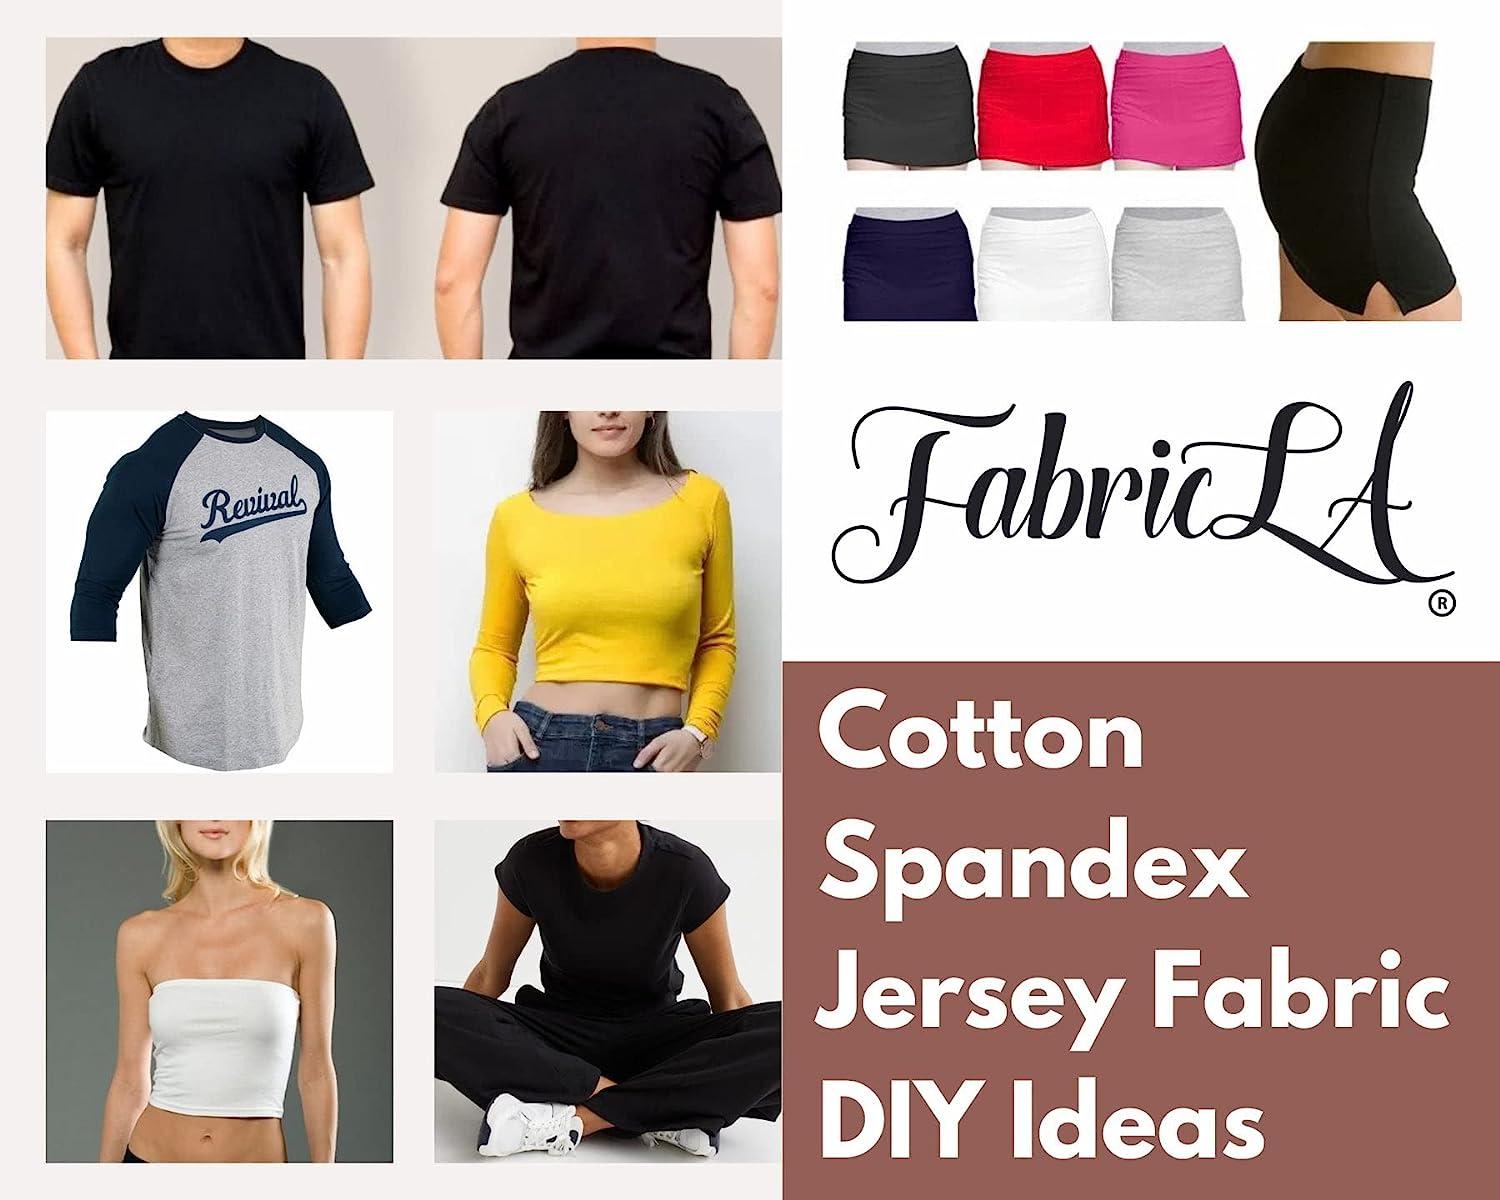 4-way Stretch Soft Cotton Spandex Fabric Jersey Knit Bestseller